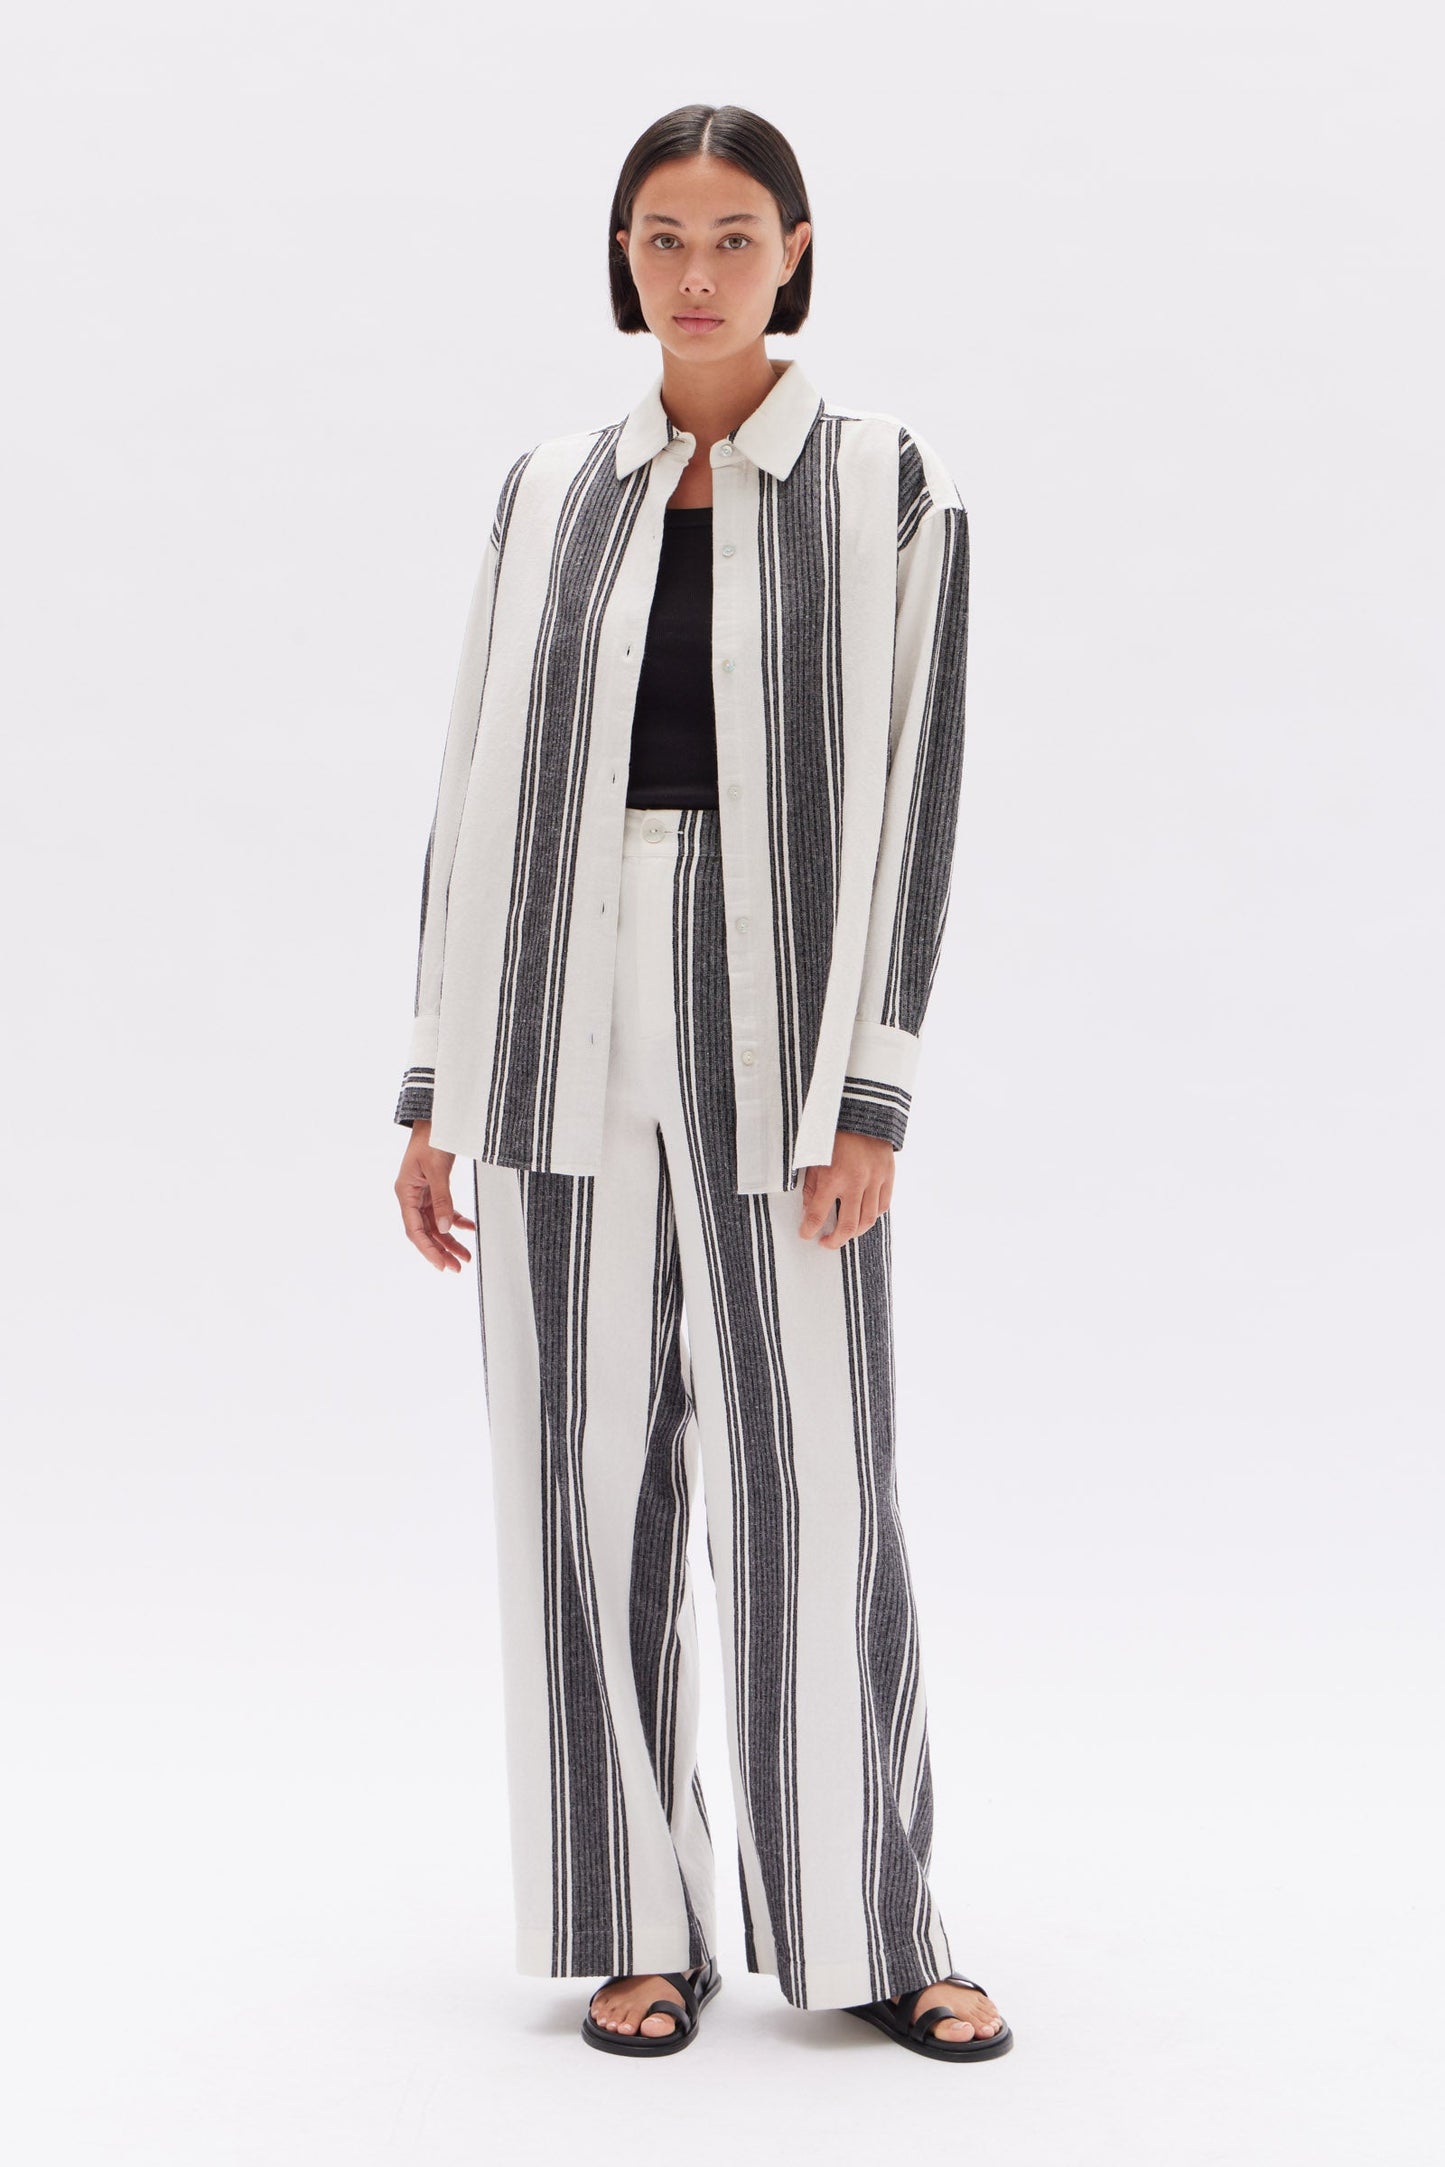 Tuscany Linen Stripe Long Sleeve Shirt - Black / White